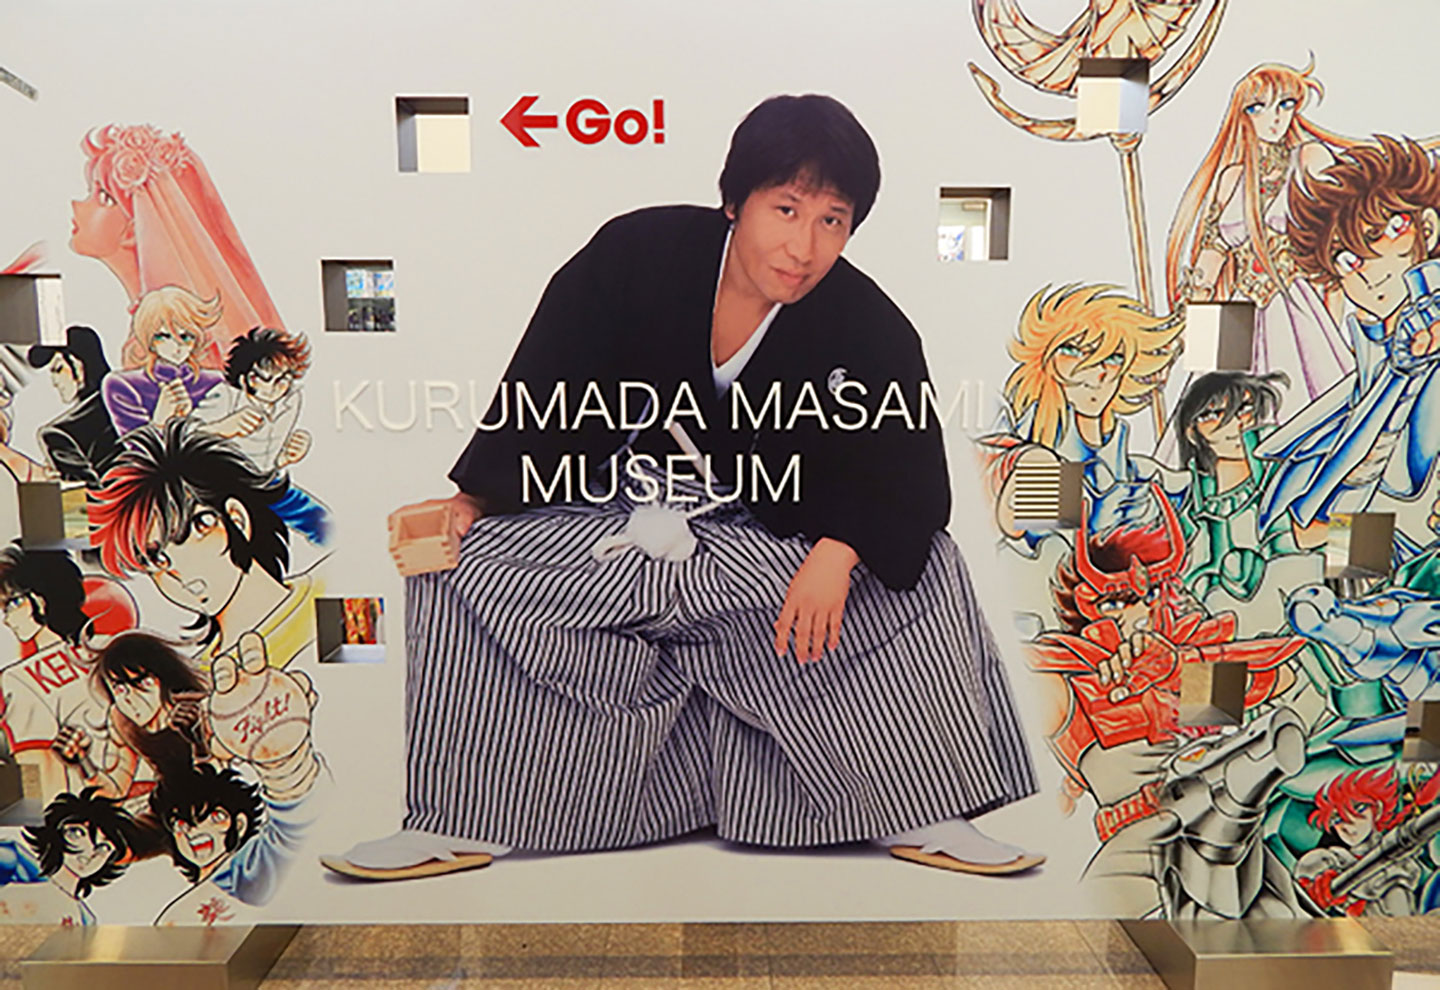 Kurumada Masami Museum